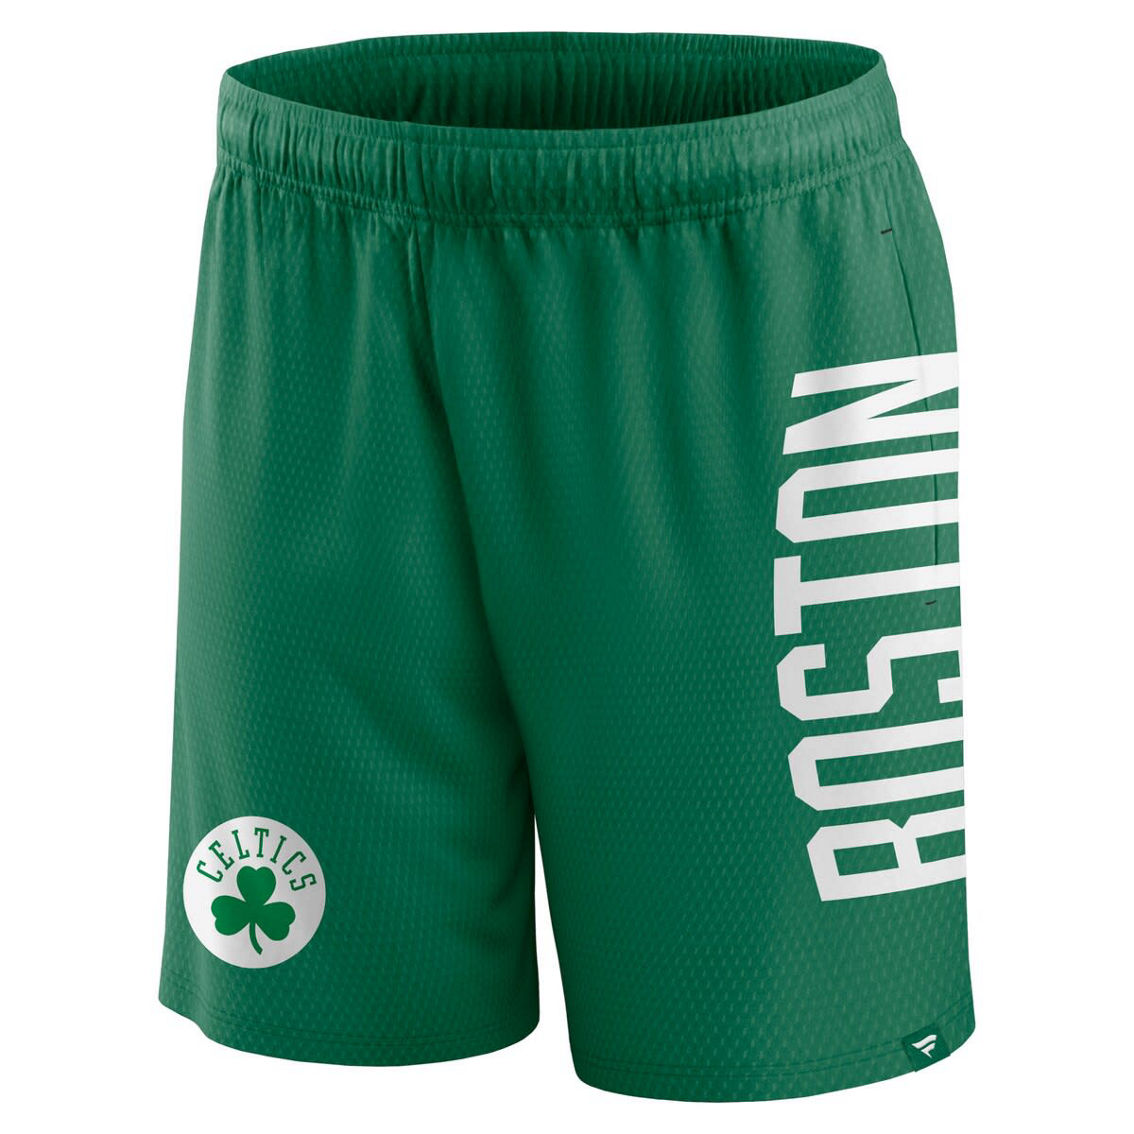 Fanatics Branded Men's Kelly Green Boston Celtics Up Mesh Shorts - Image 3 of 4